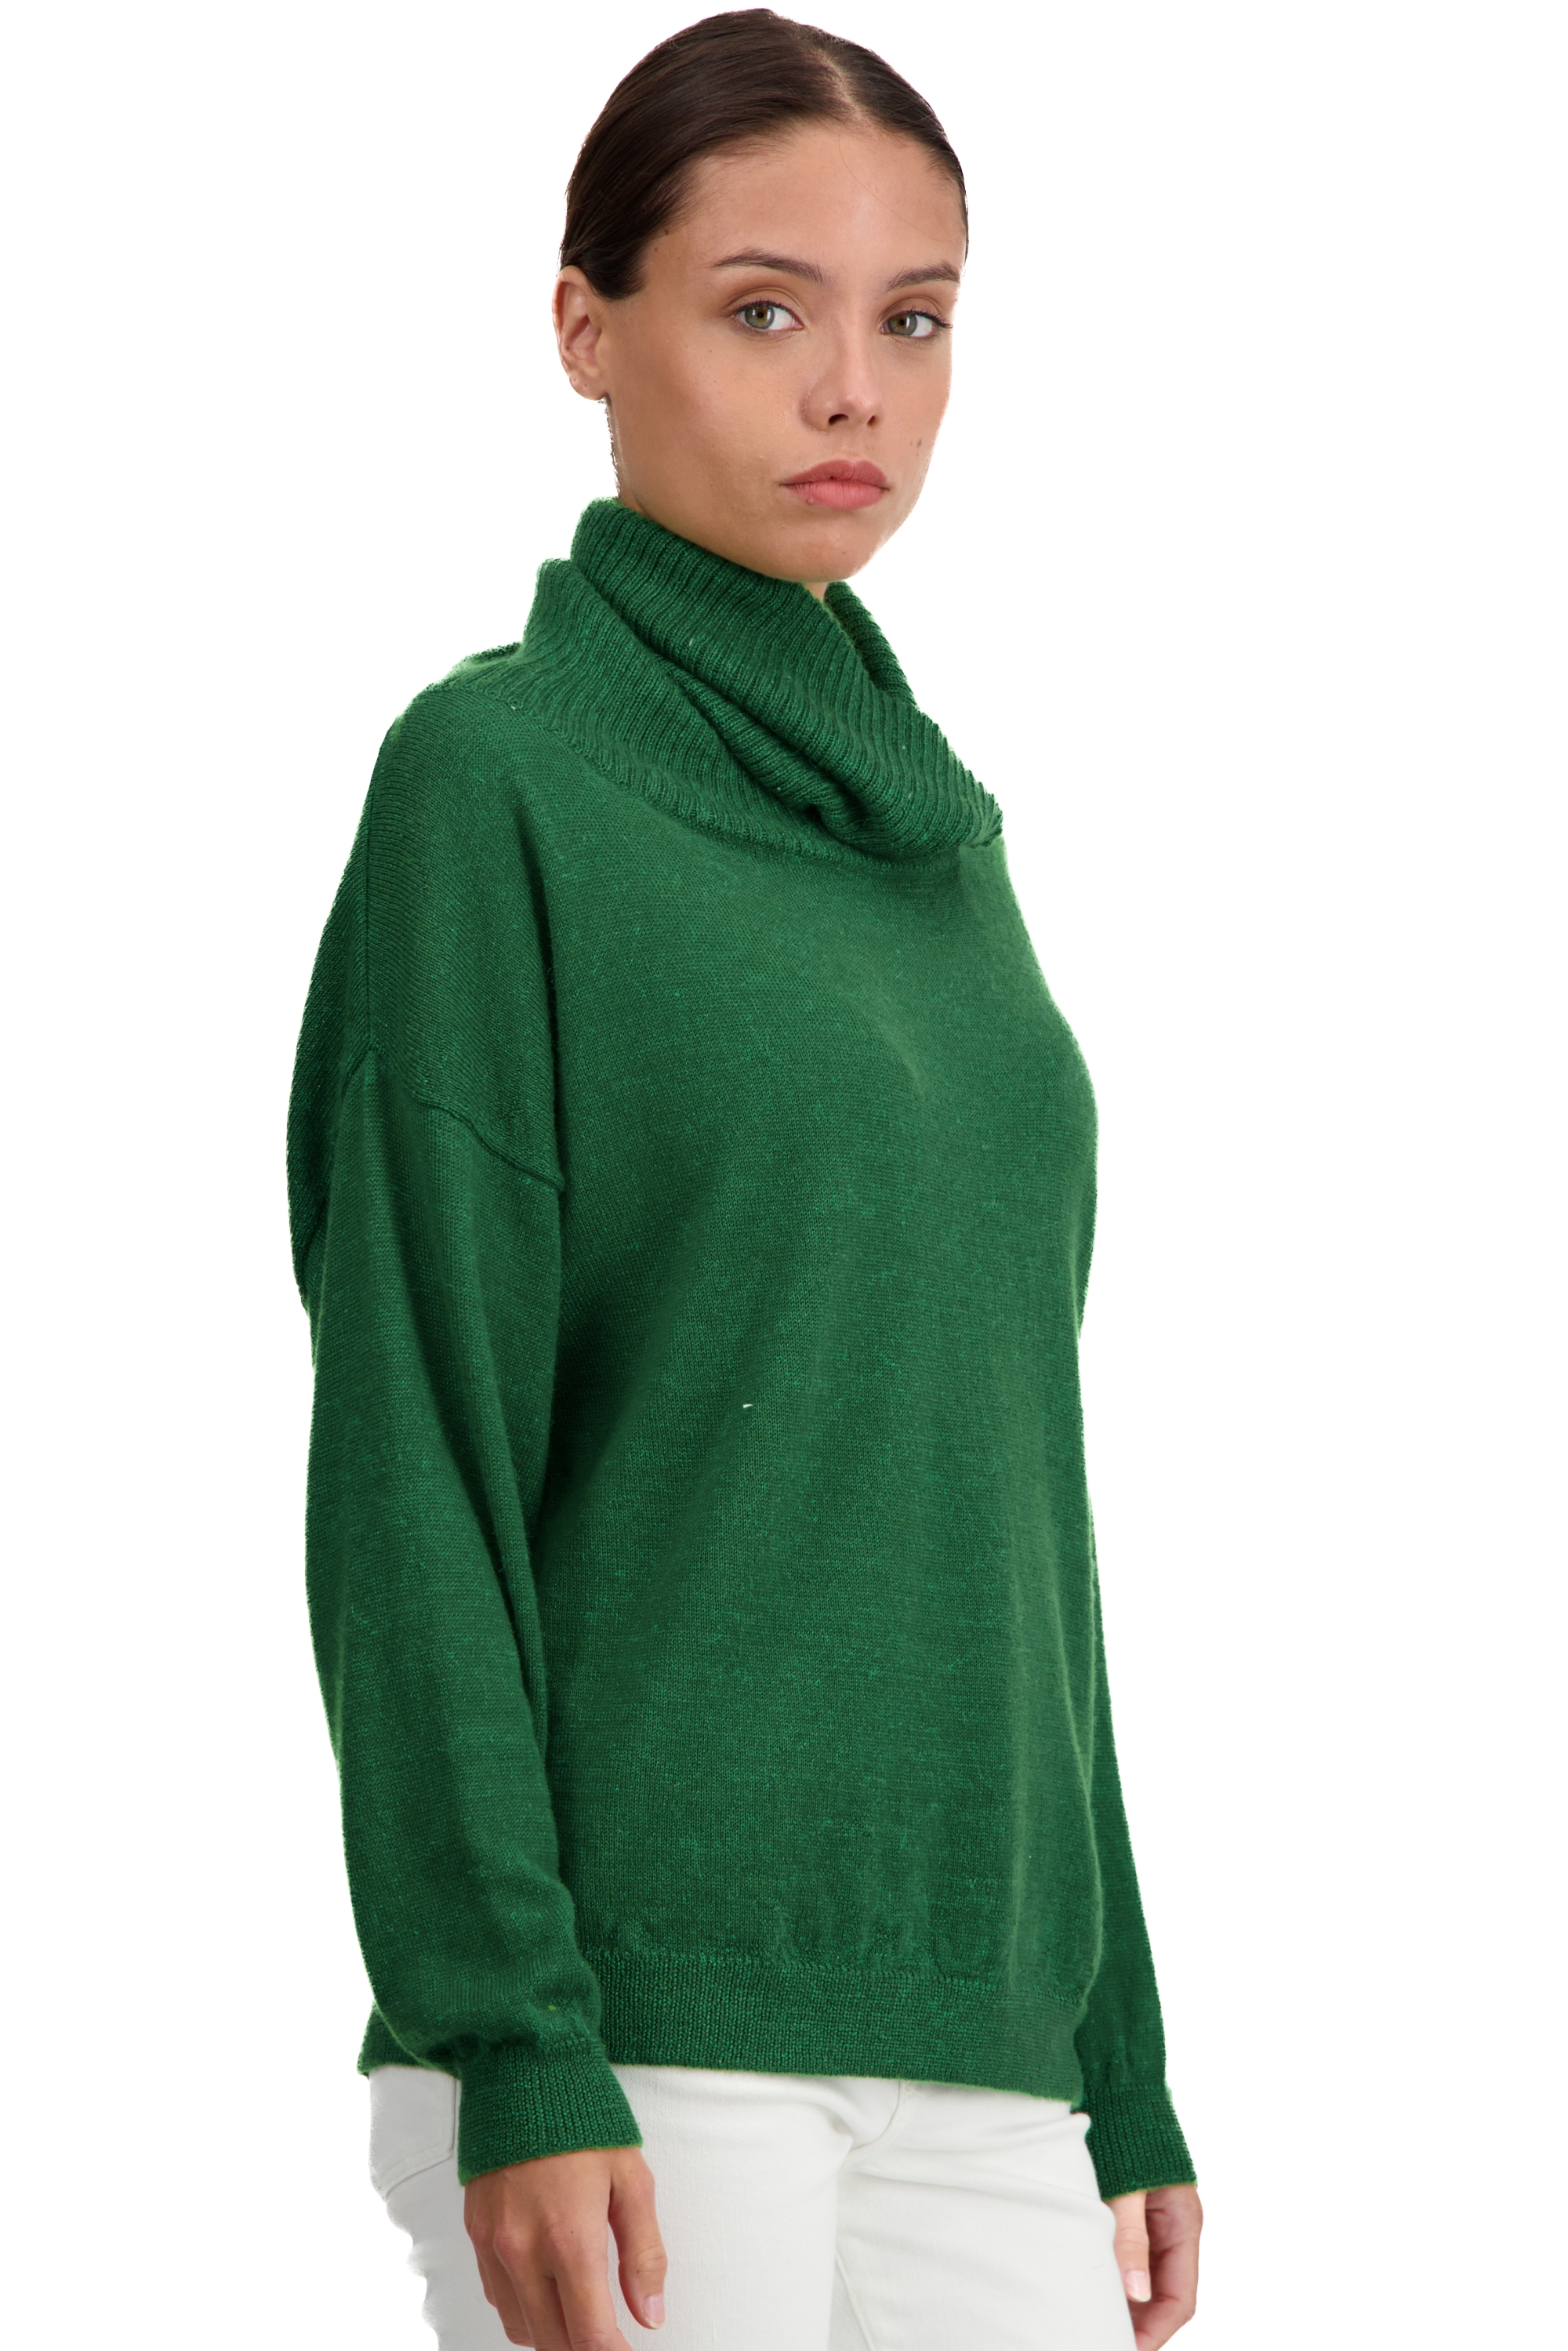 Baby Alpakawolle kaschmir pullover damen rollkragen tanis green leaf xs